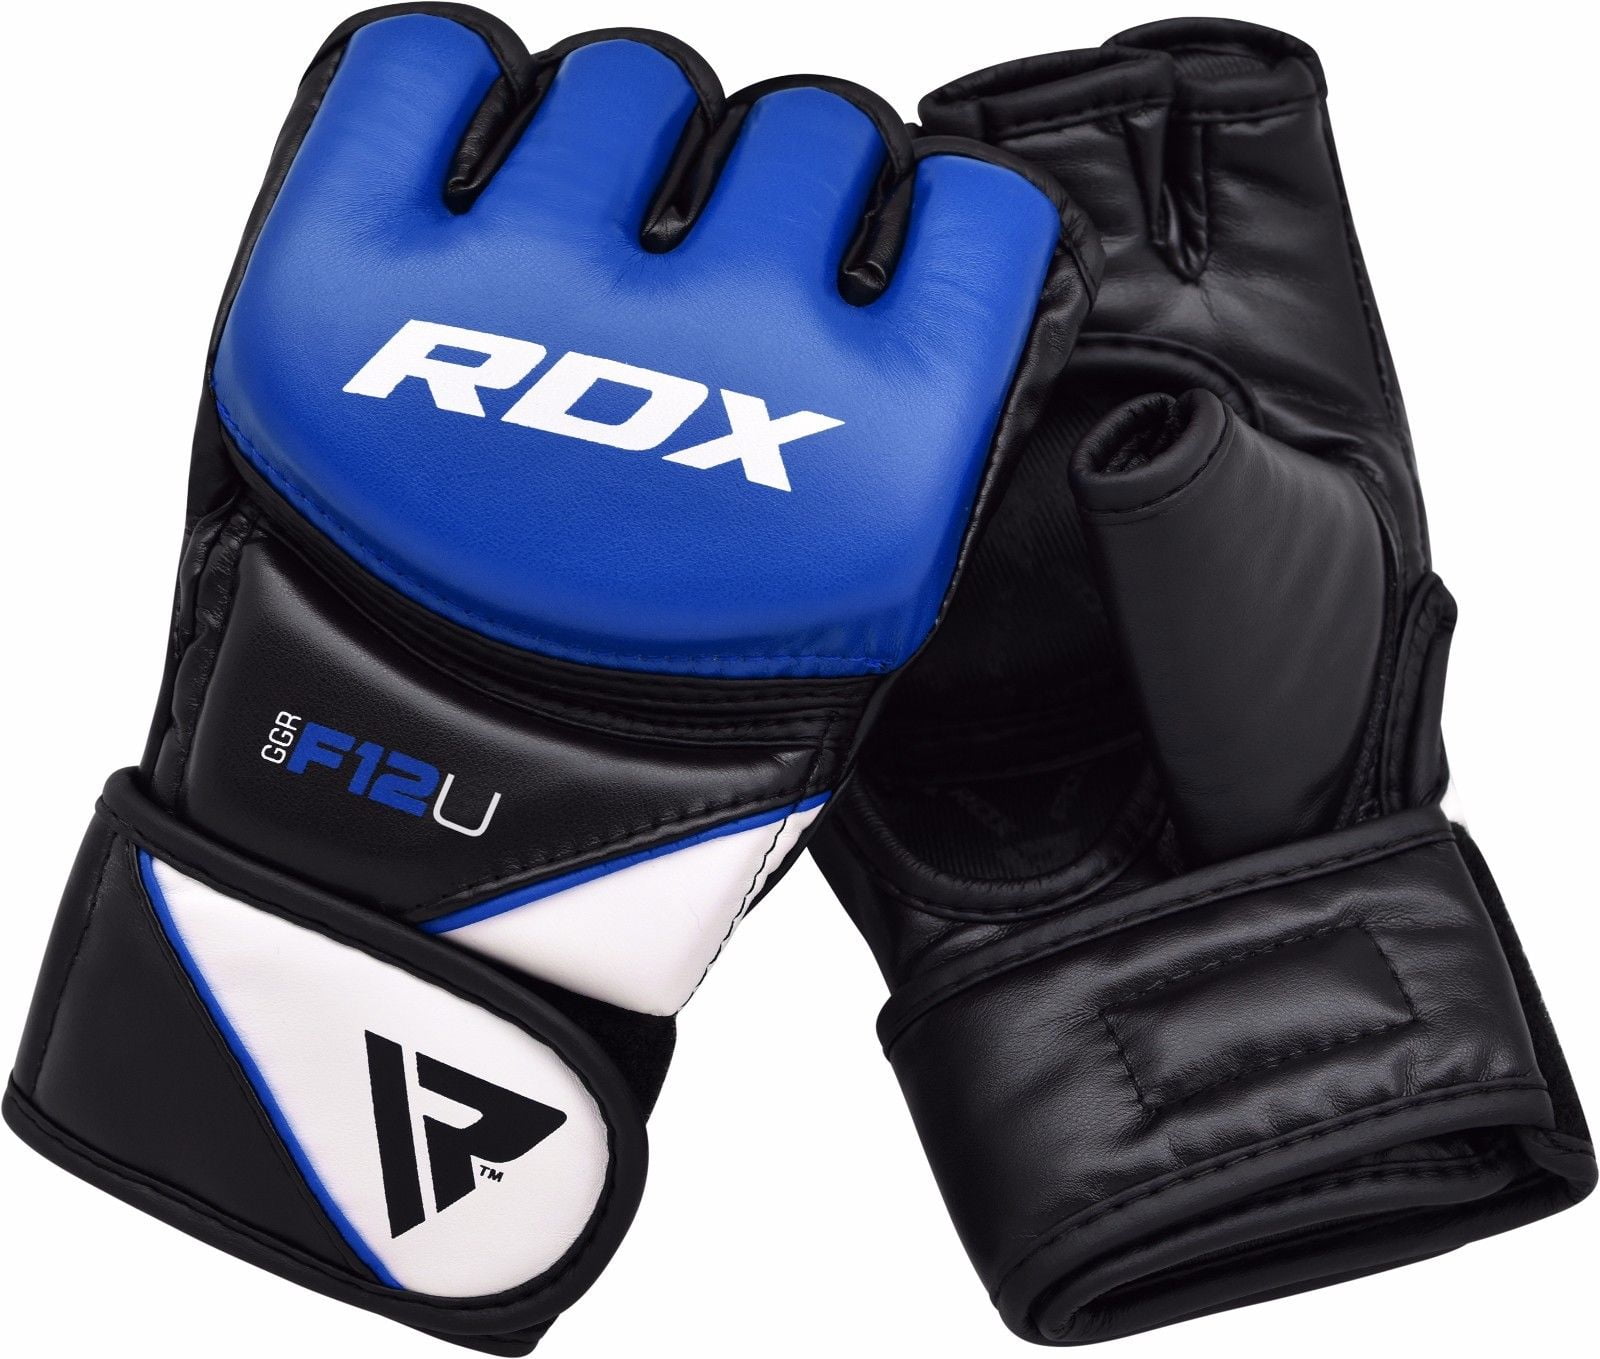 Details about   rdx gel x 3 mma gloves